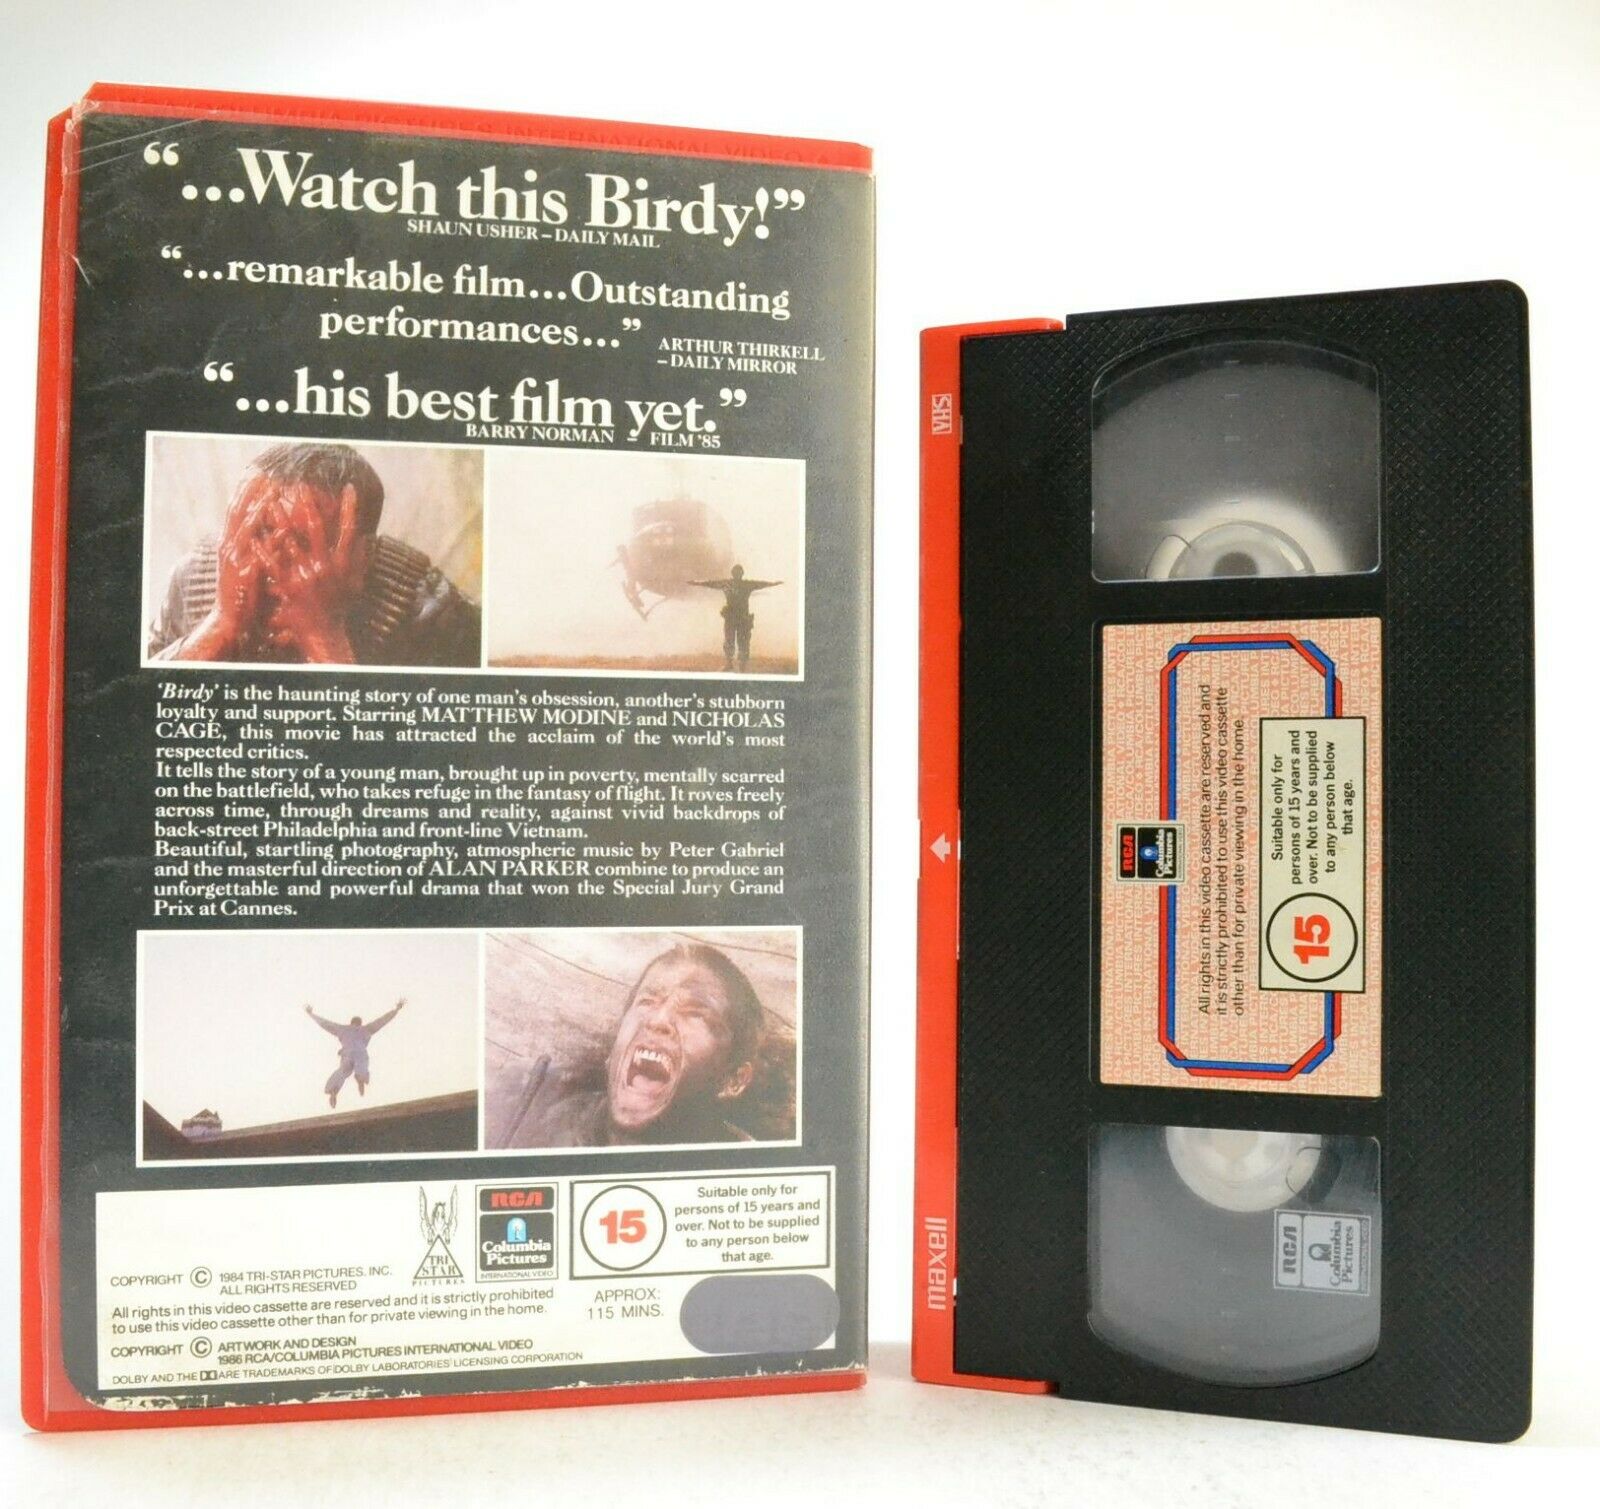 Birdy: Based On W.Wharton Novel - Drama (1984) - Large Box - Nicolas Cage - VHS-